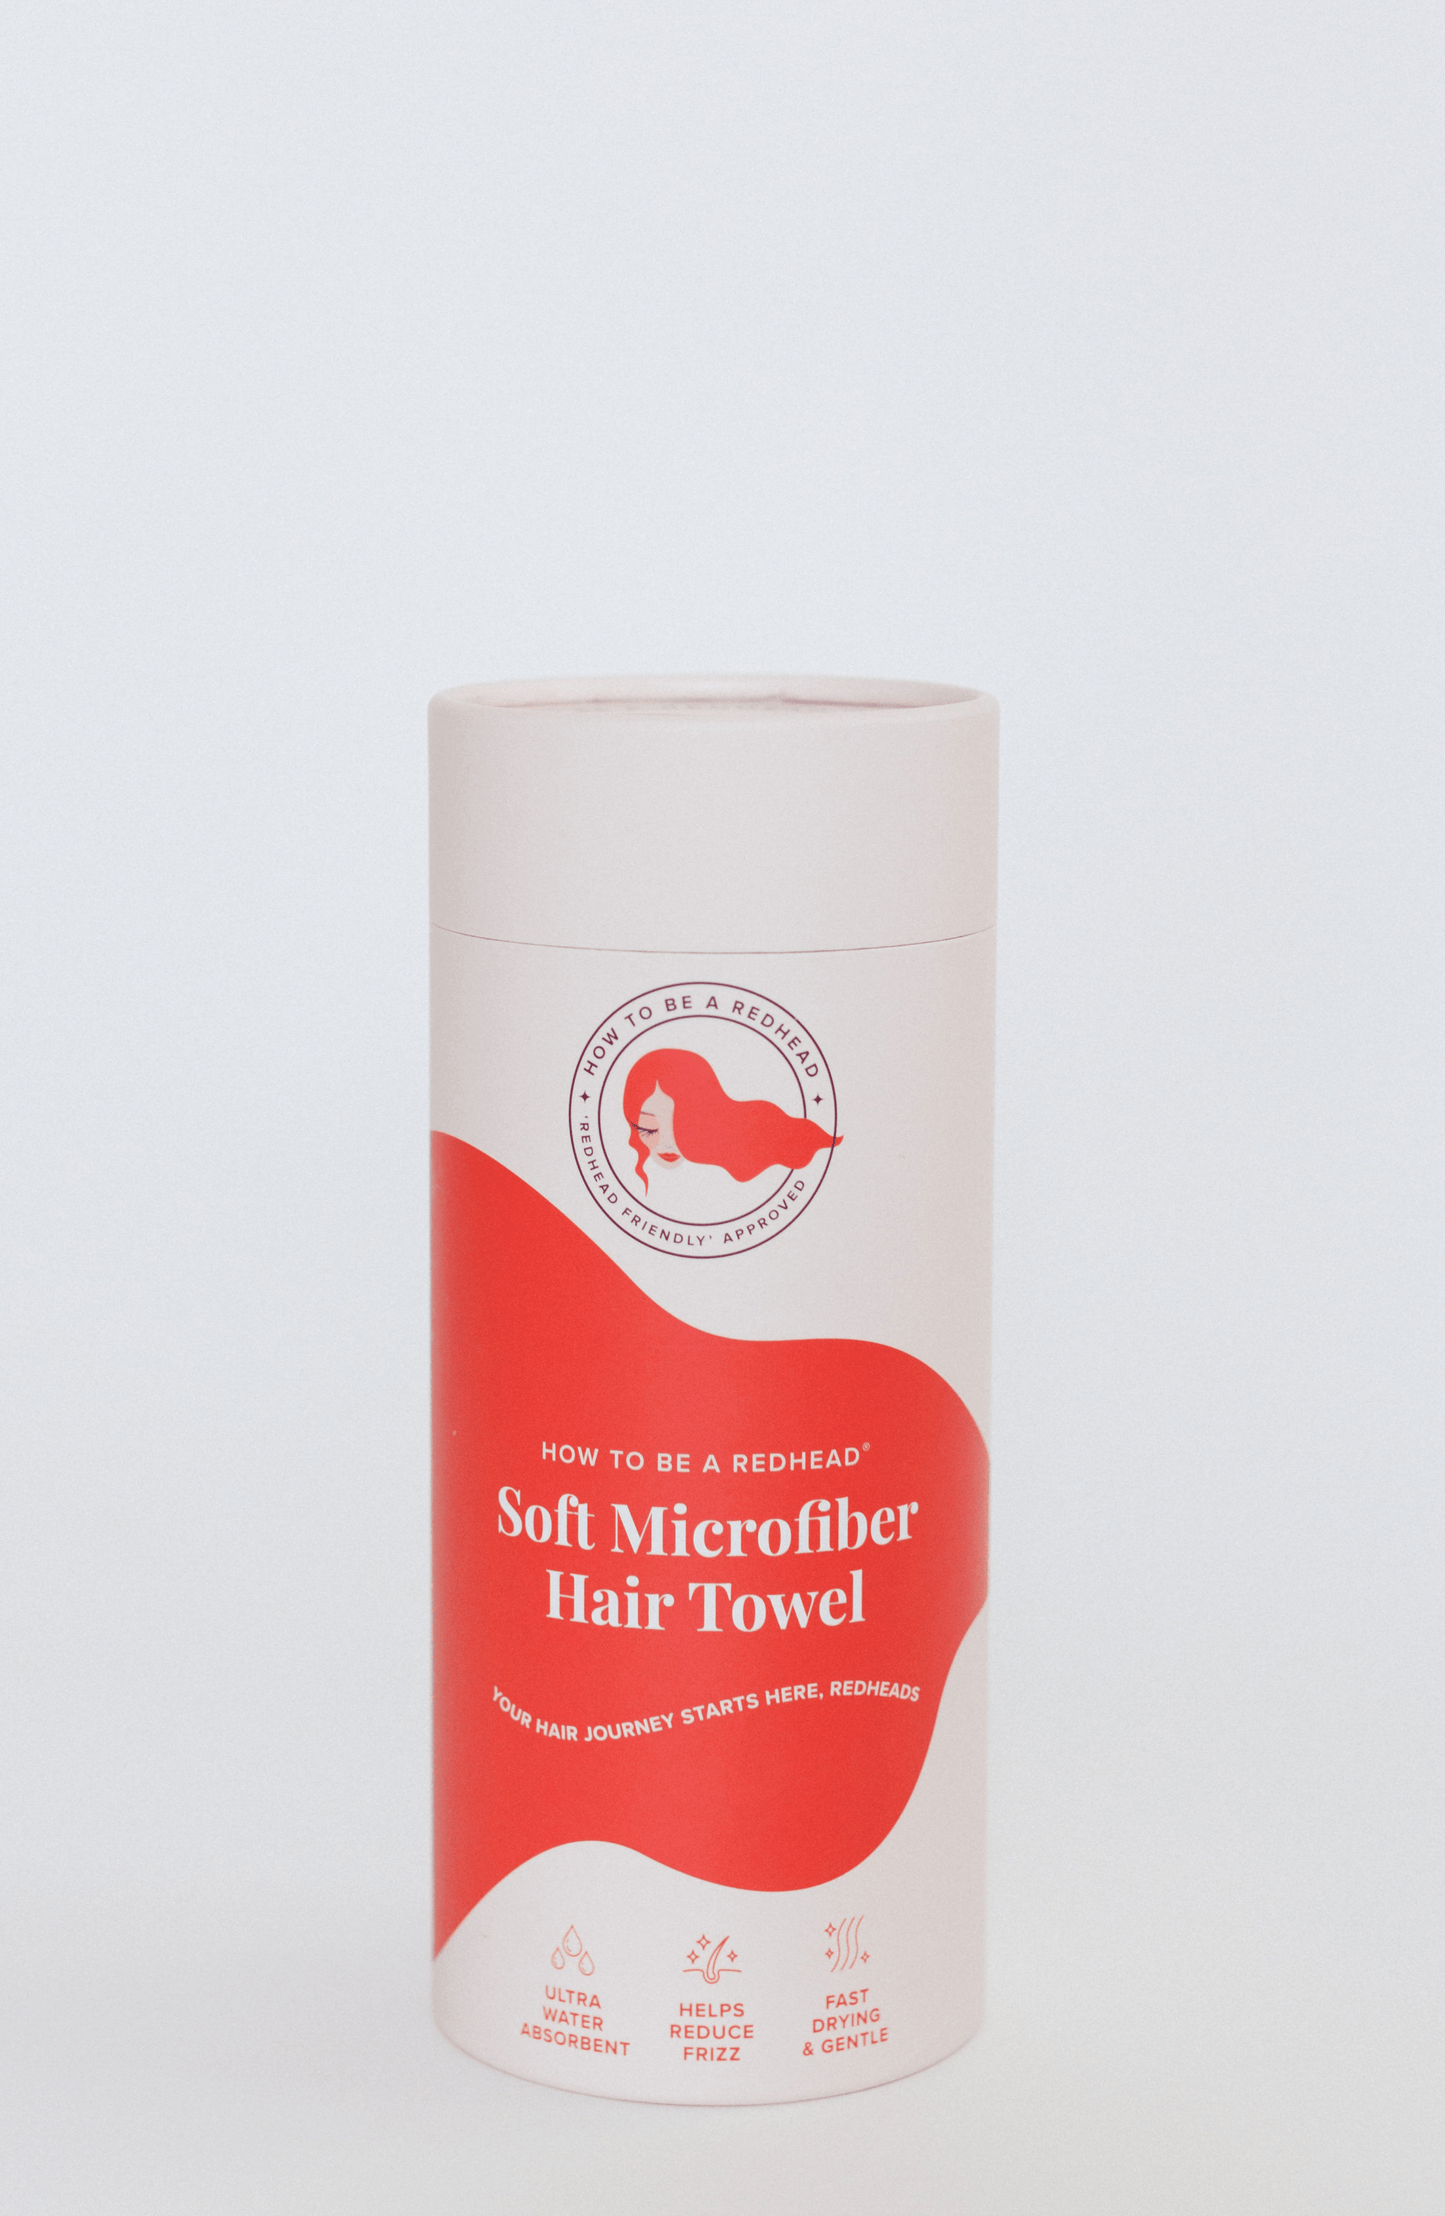 Soft Microfiber Hair Towel for Redheads